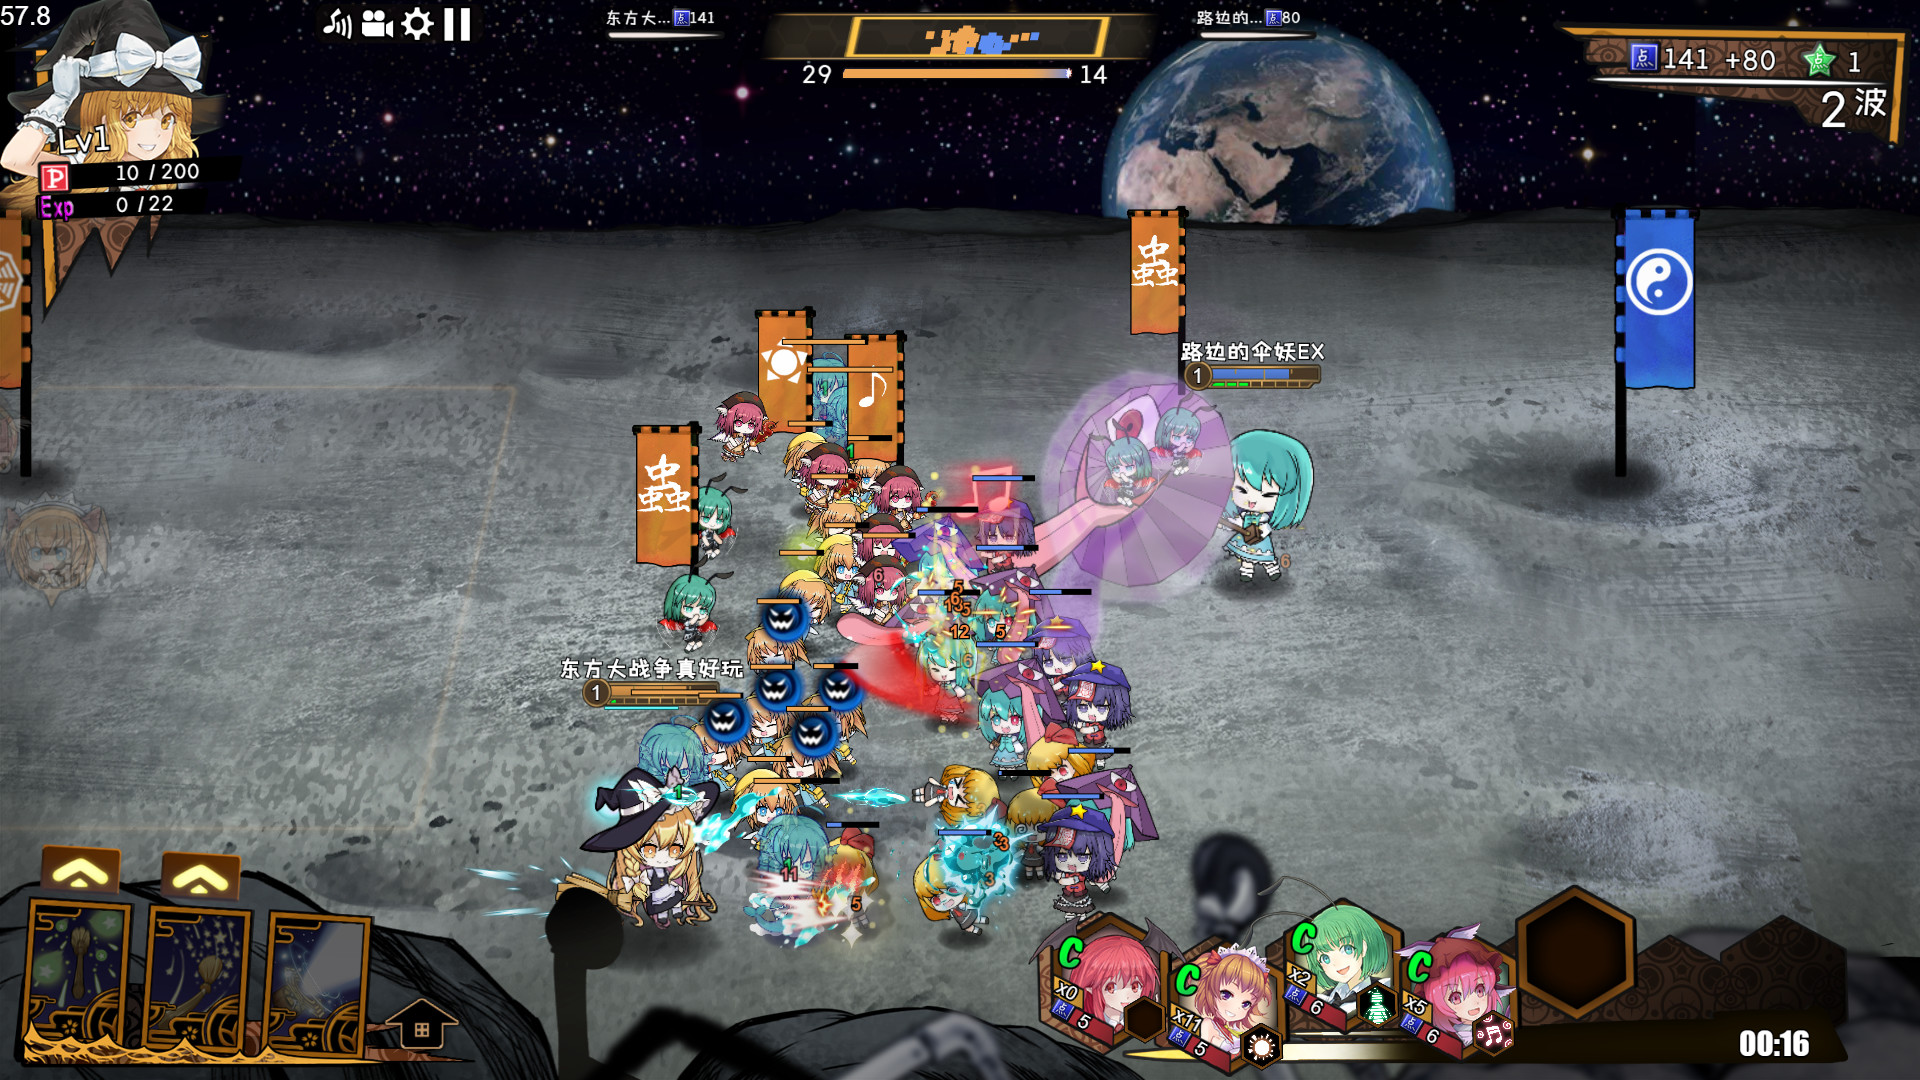  Touhou Big Big Battle: The Justice screenshot